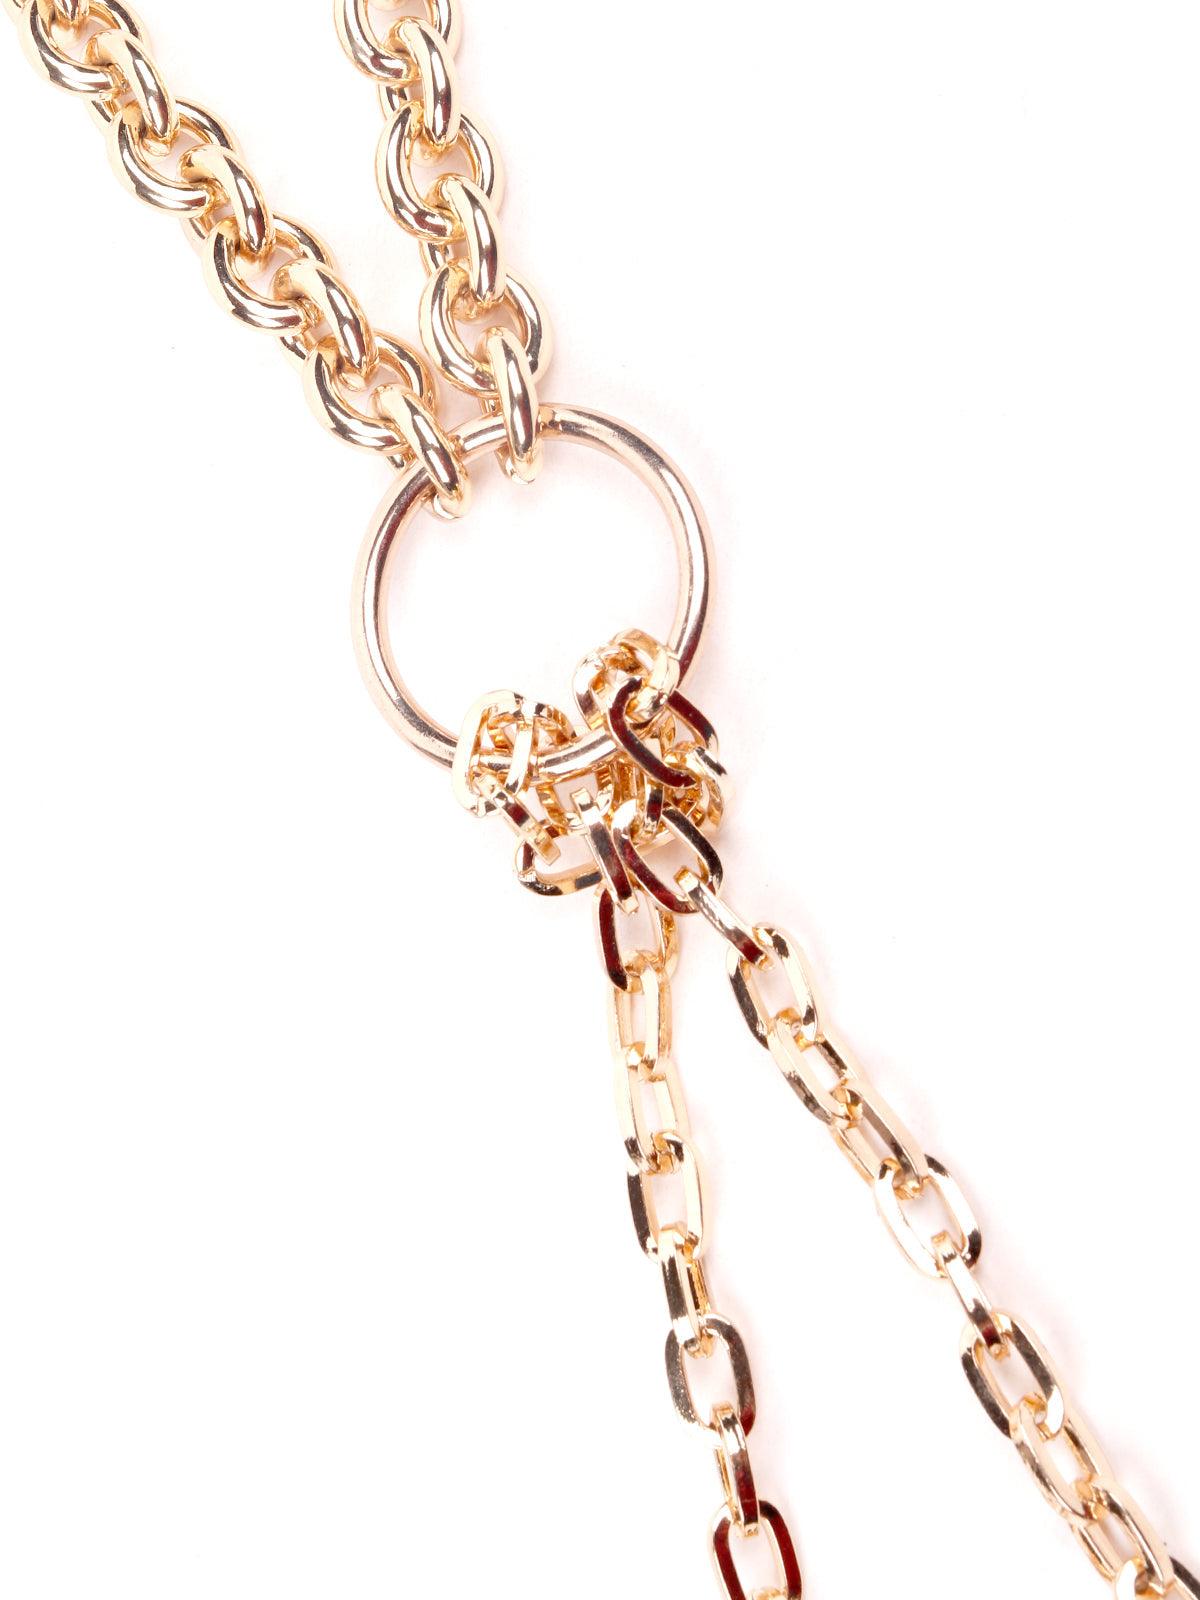 Stunning gold interlinked statement necklace - Odette